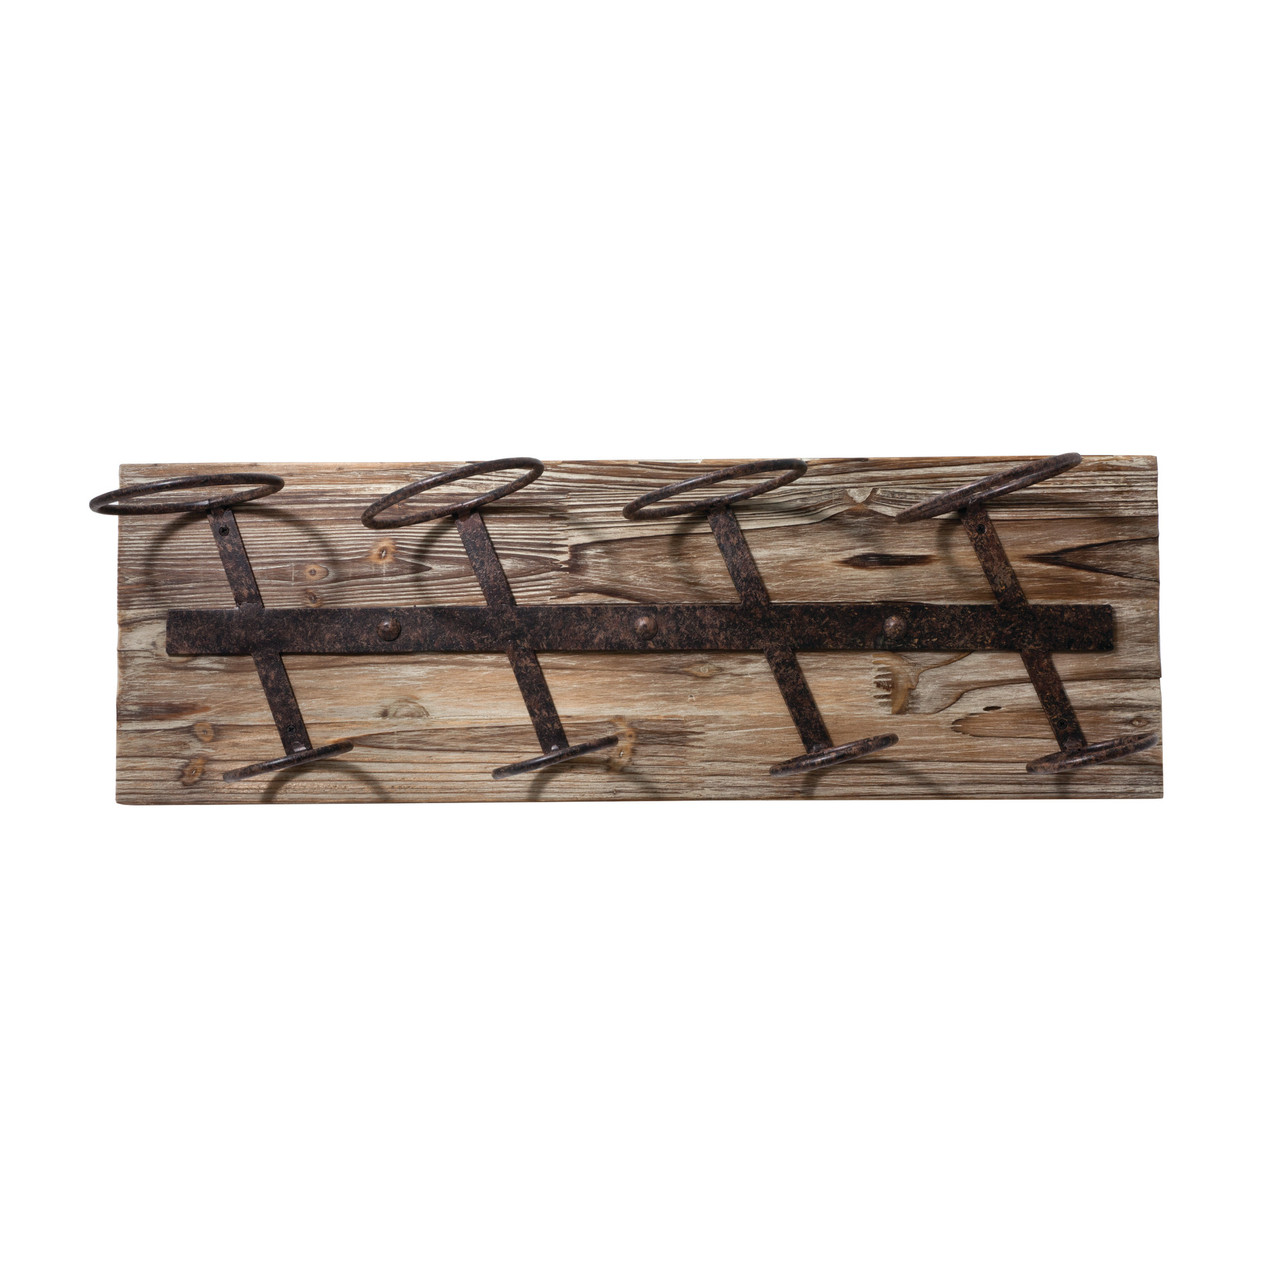 Metal and Wood Wine Rack by Twine®